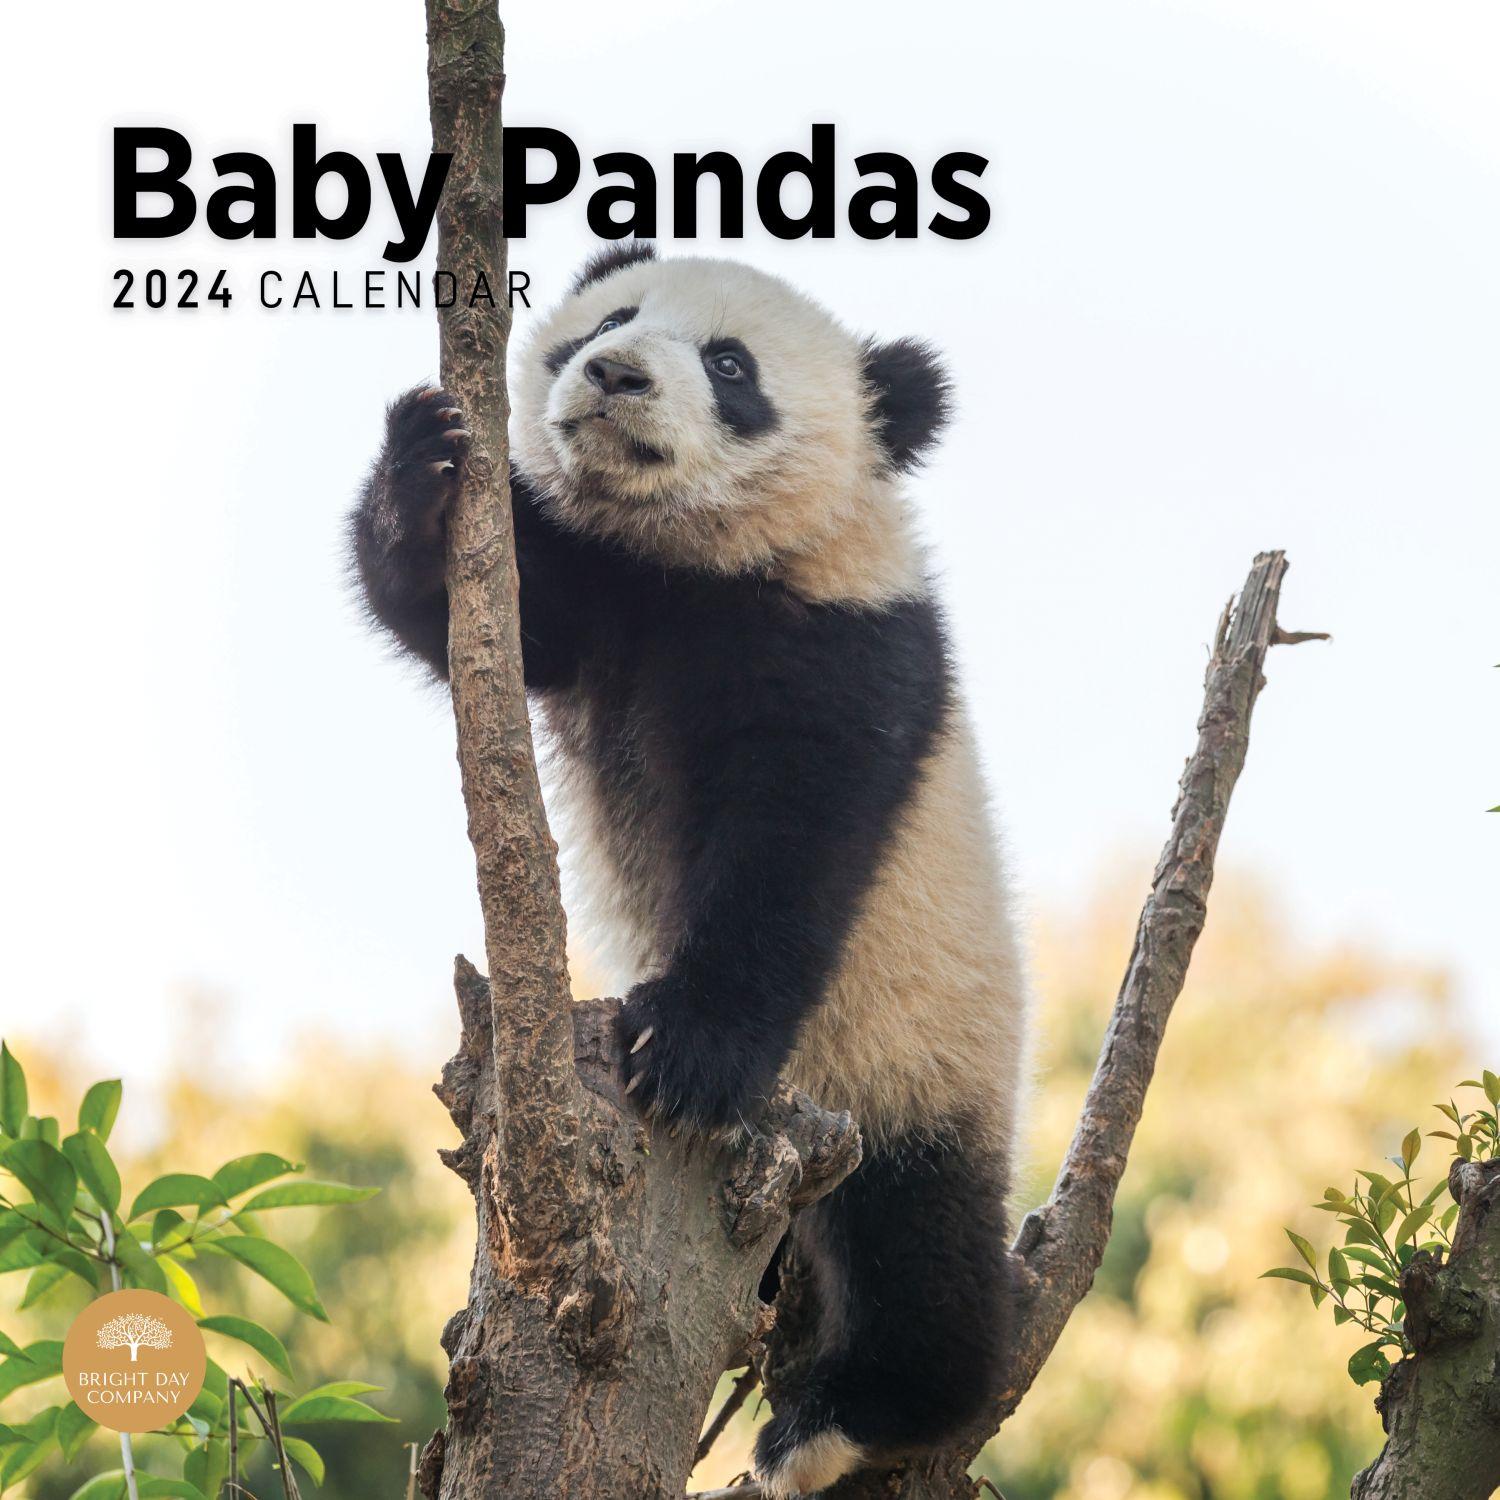 Baby Pandas 2024 Wall Calendar - Calendars.com